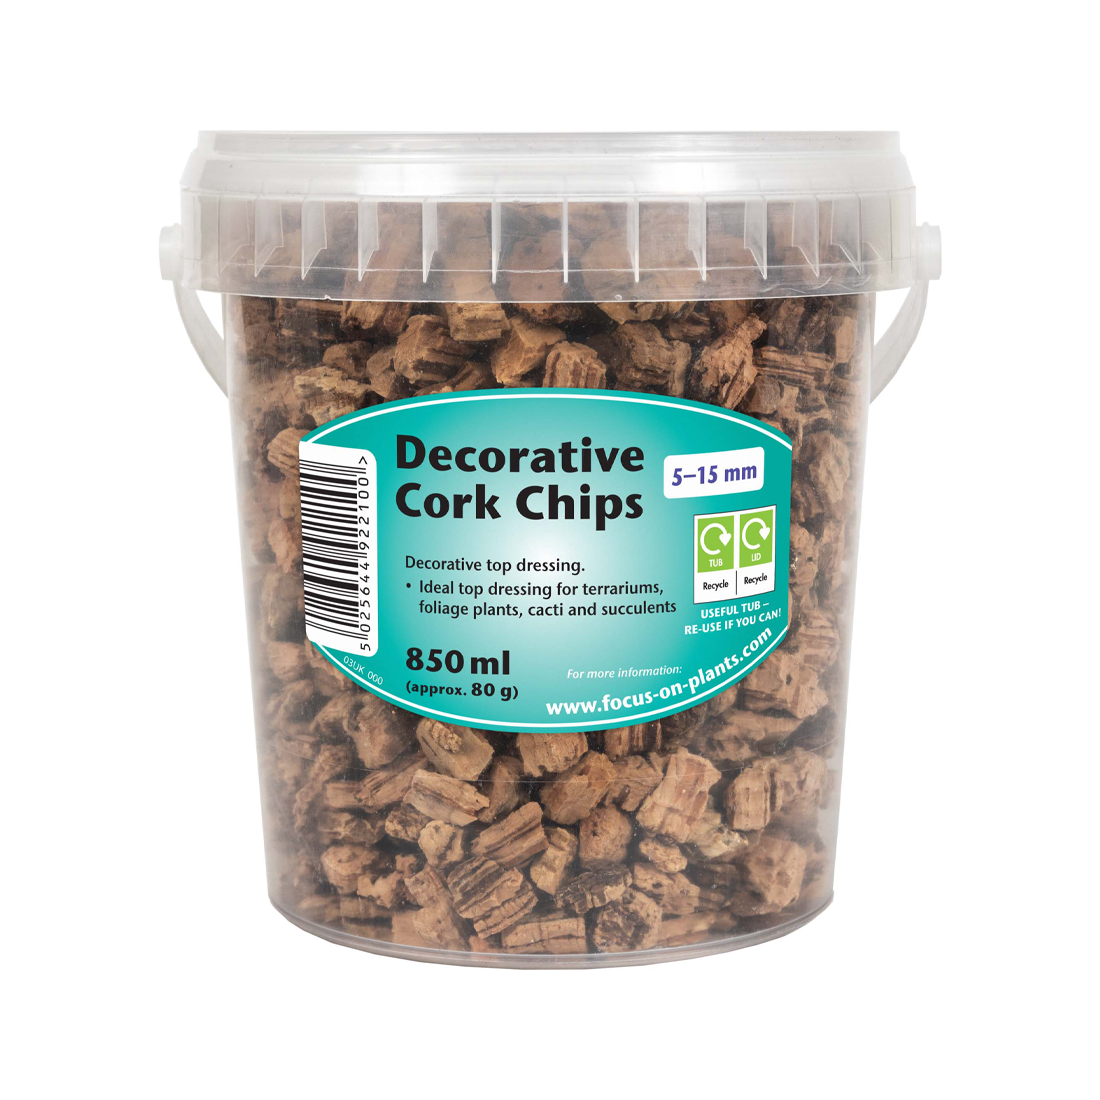 Decorative Cork Chips - 850ml